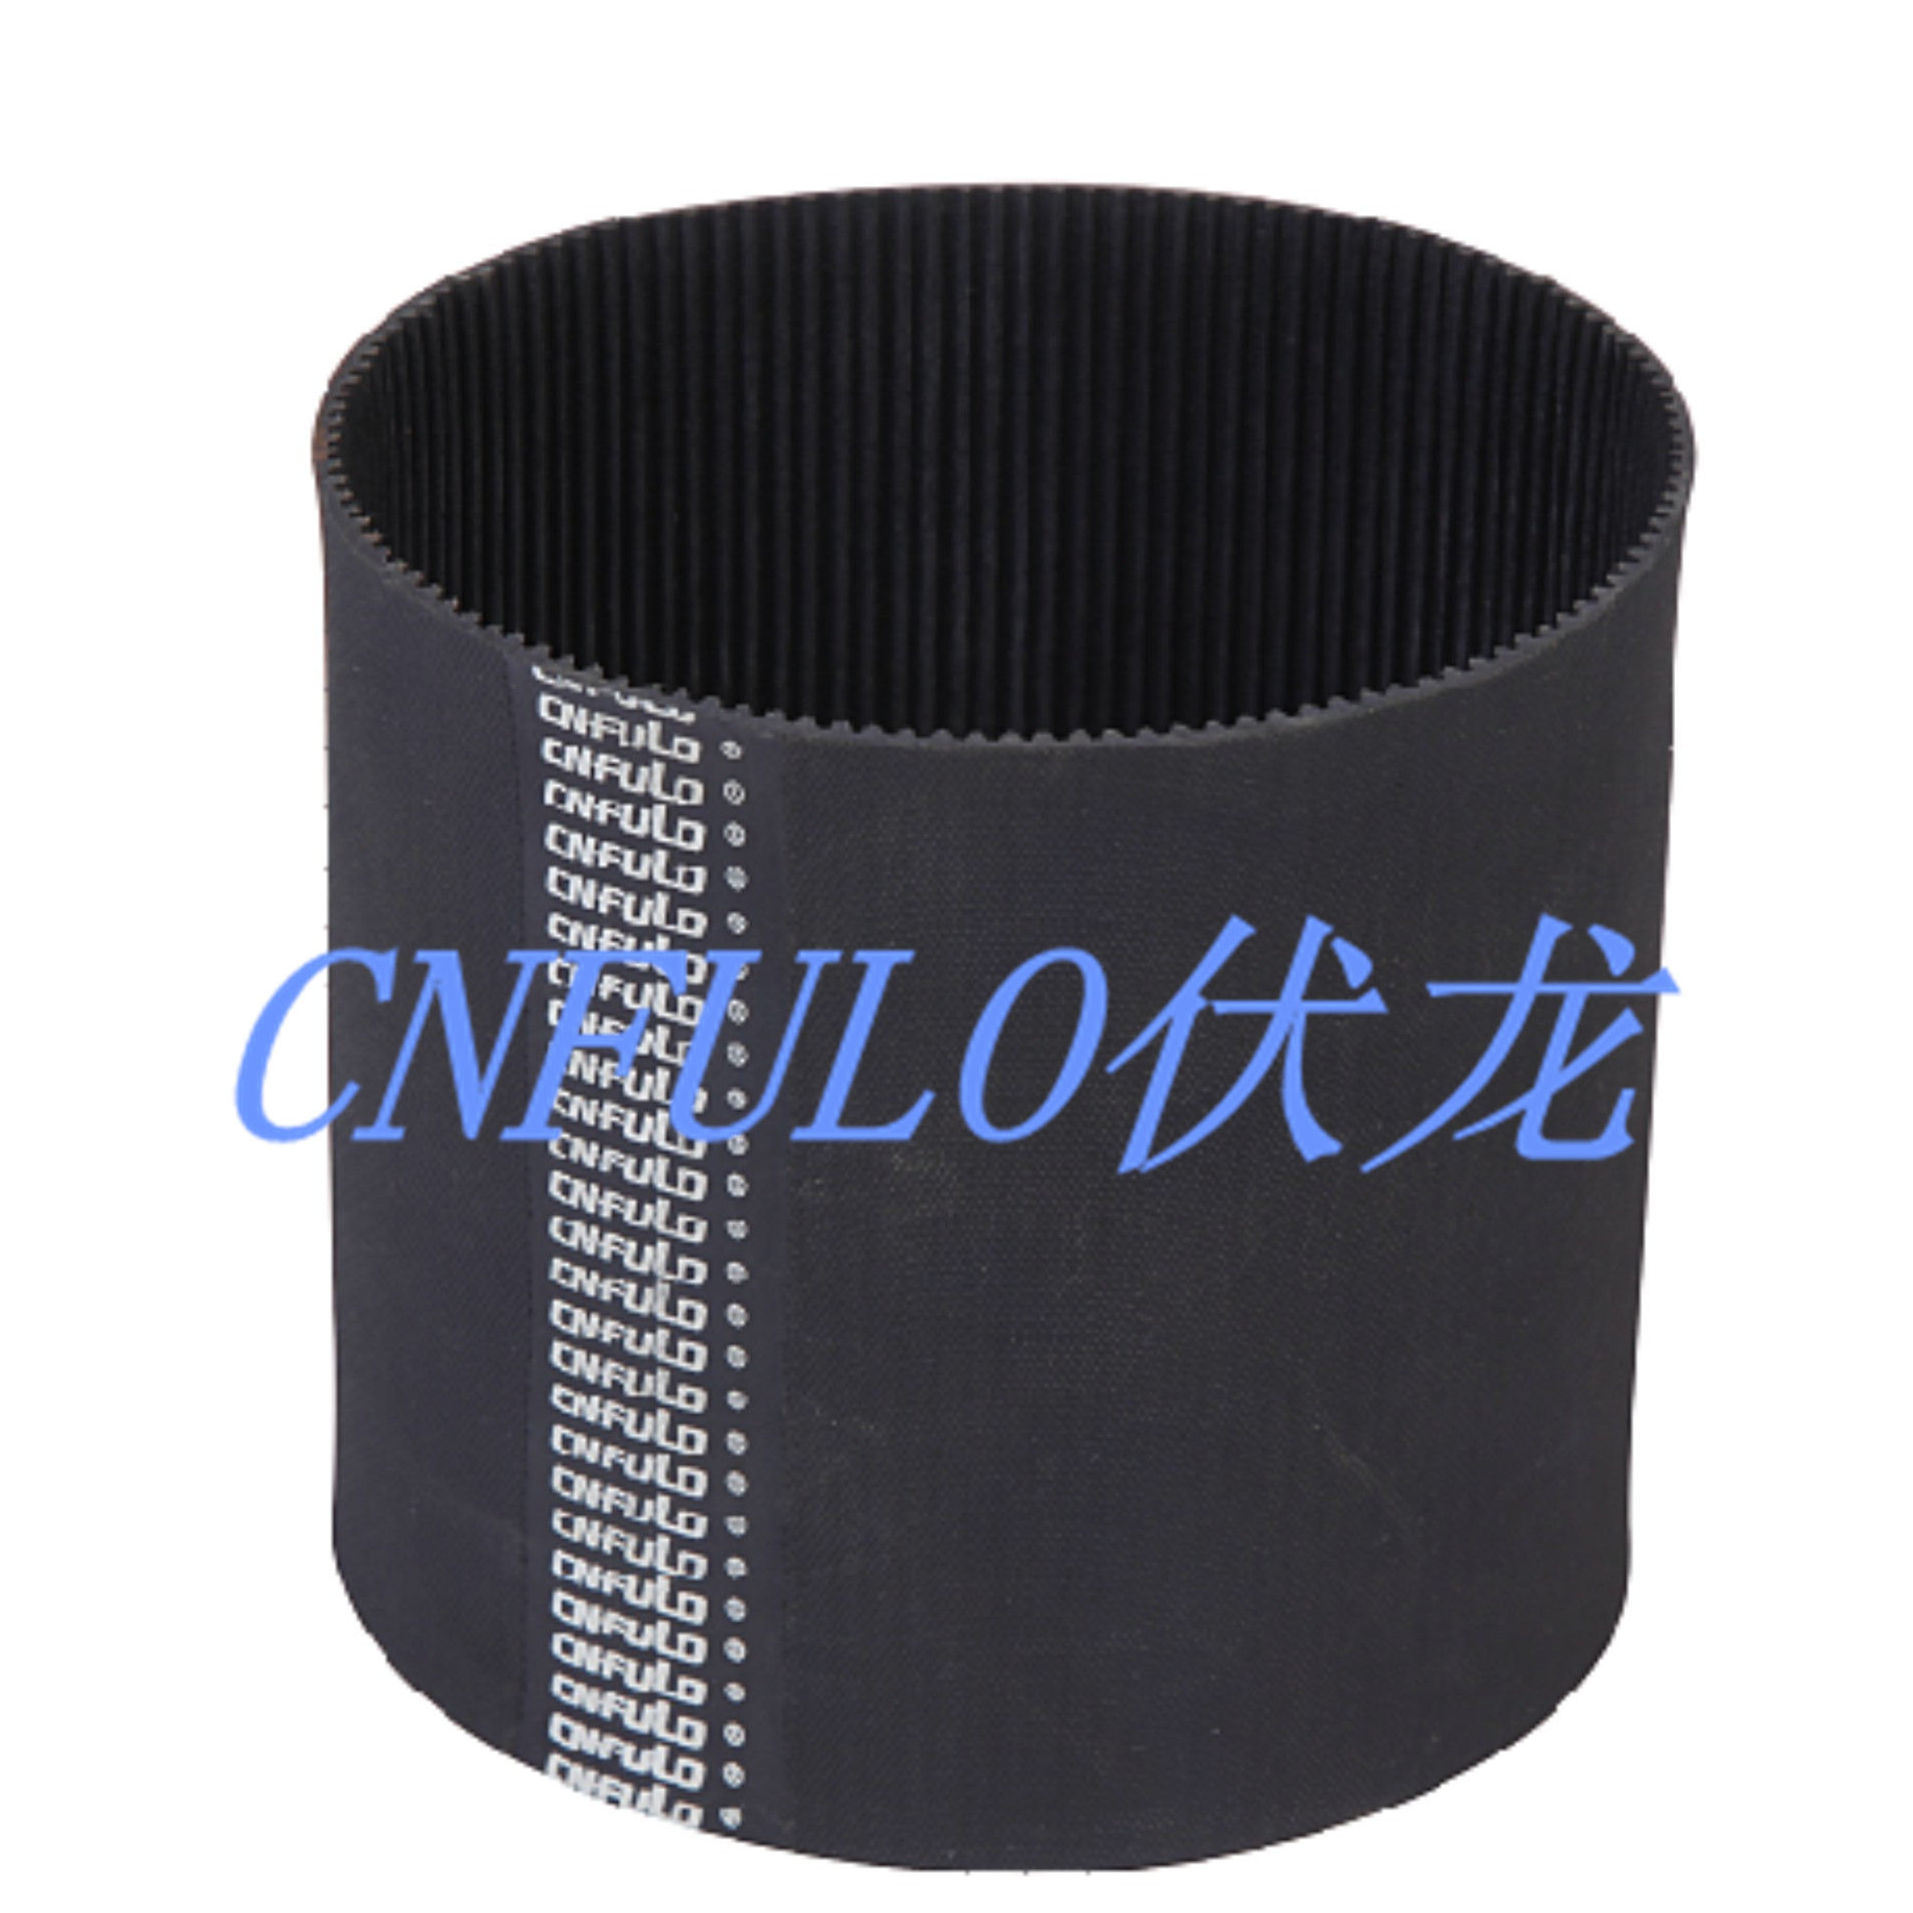 Industrial Rubber Timing Belt, Power Transmission/Texitle/Printer Belt, 69mxl